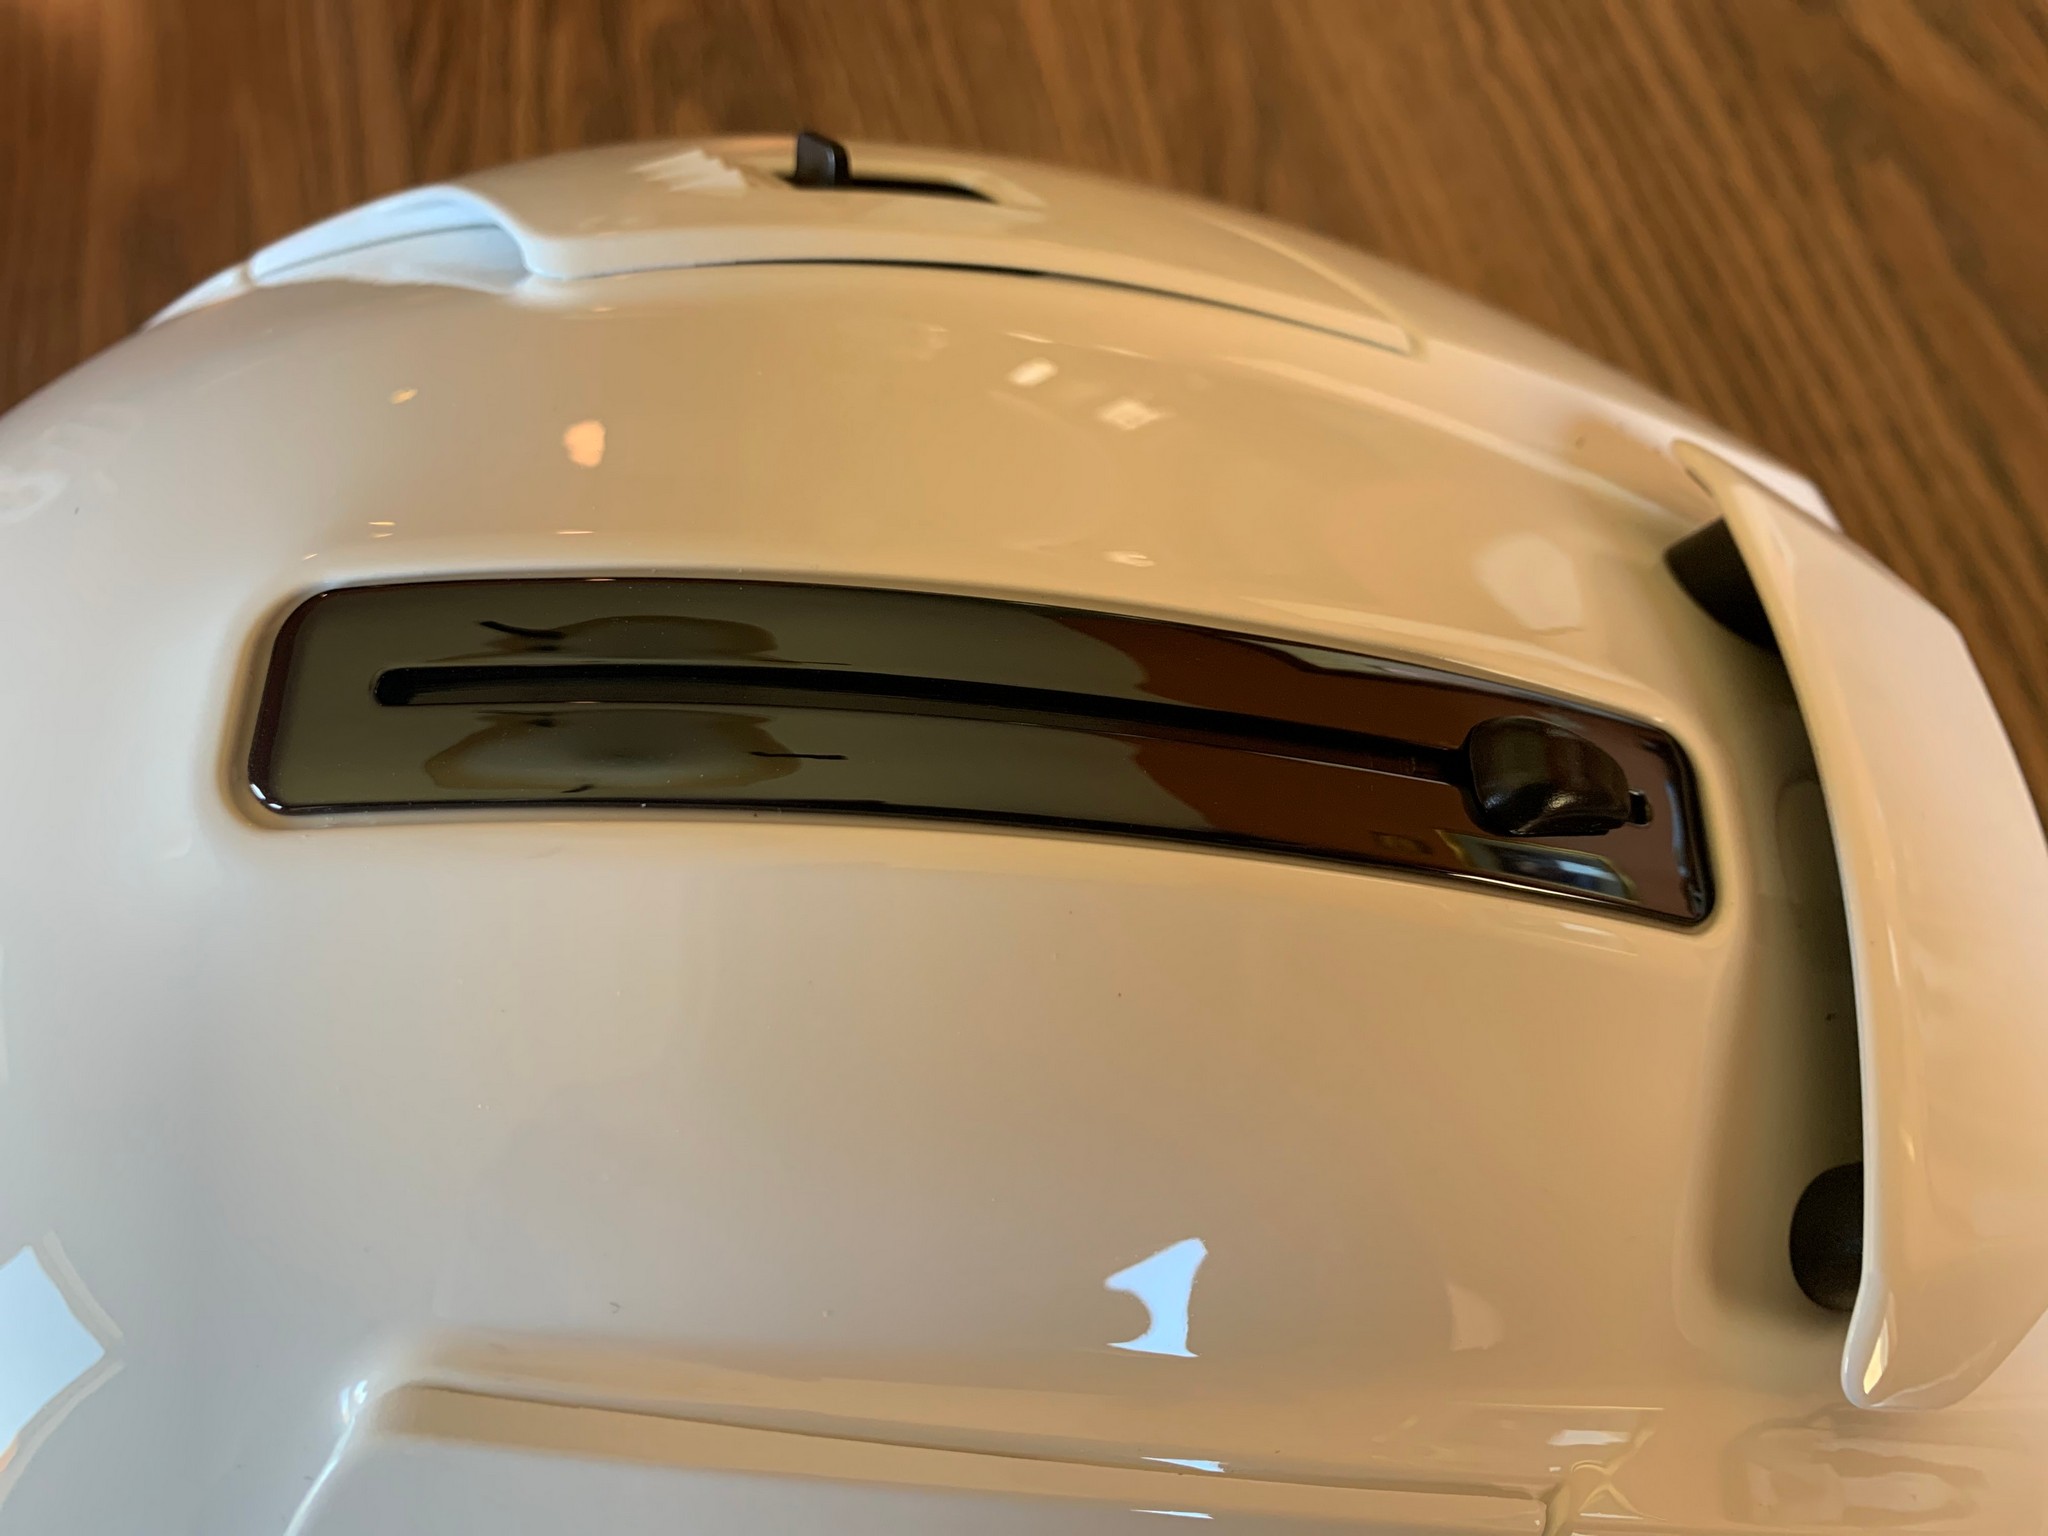 Sun shield slide mechanism on top of helmet